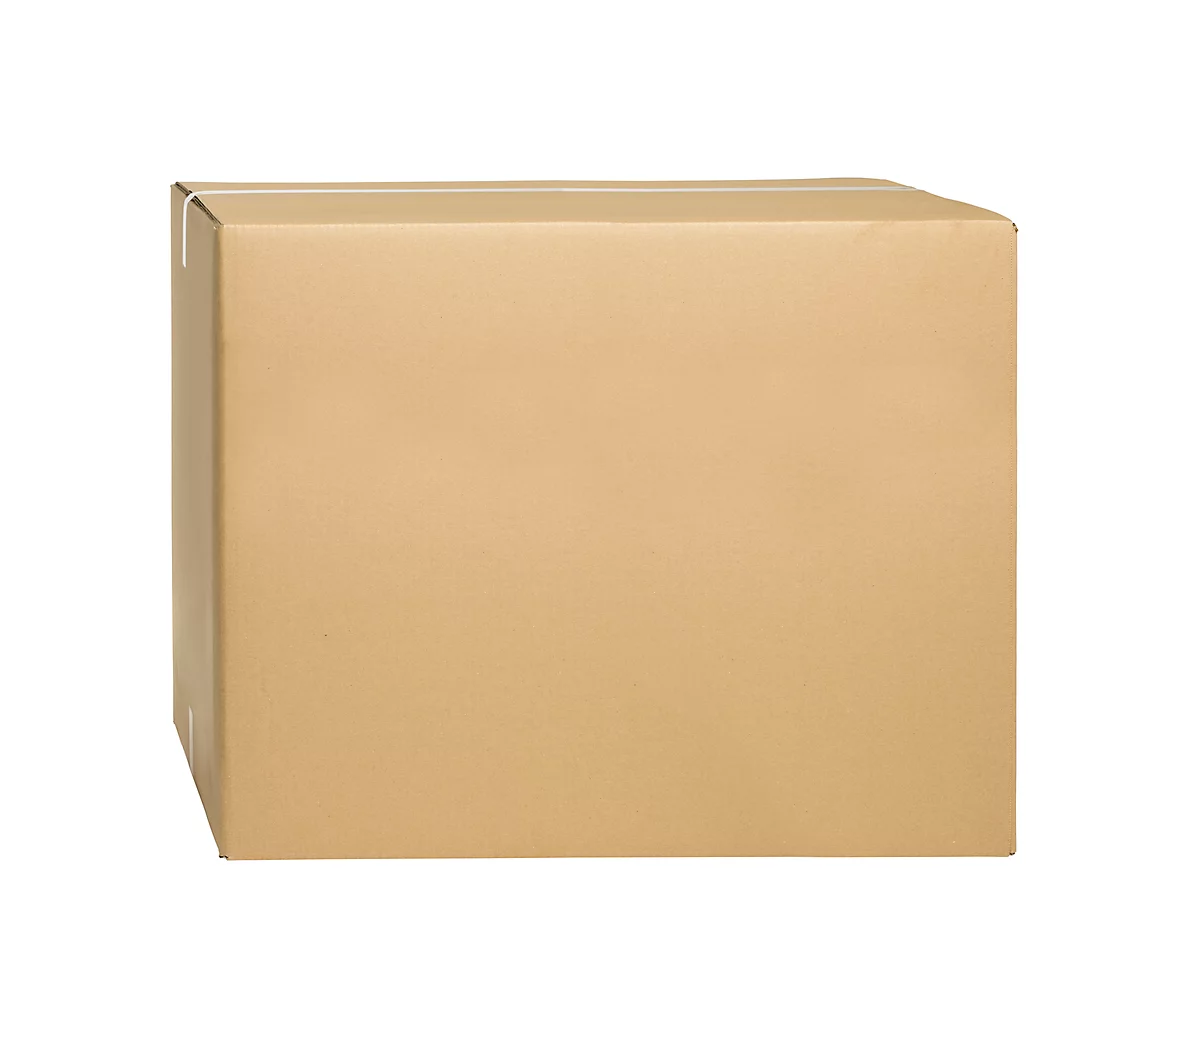 Cajas plegables de cartón ondulado, doble pared, 600 x 500 x 500 mm, marrón